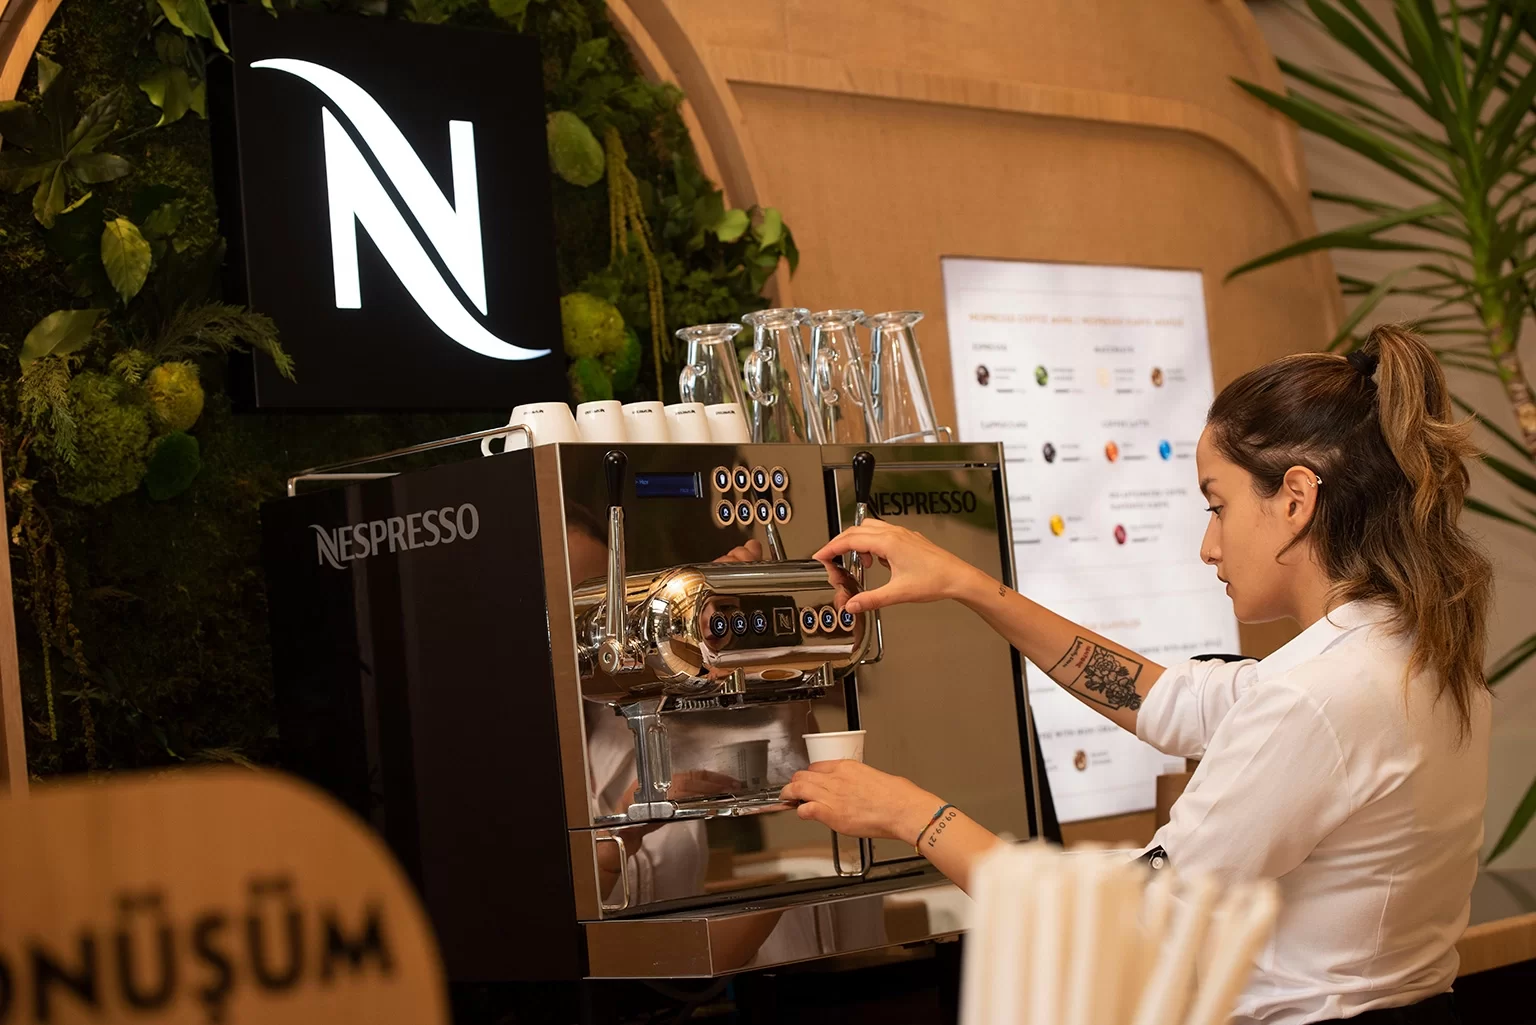 Nespresso Coffee Shop